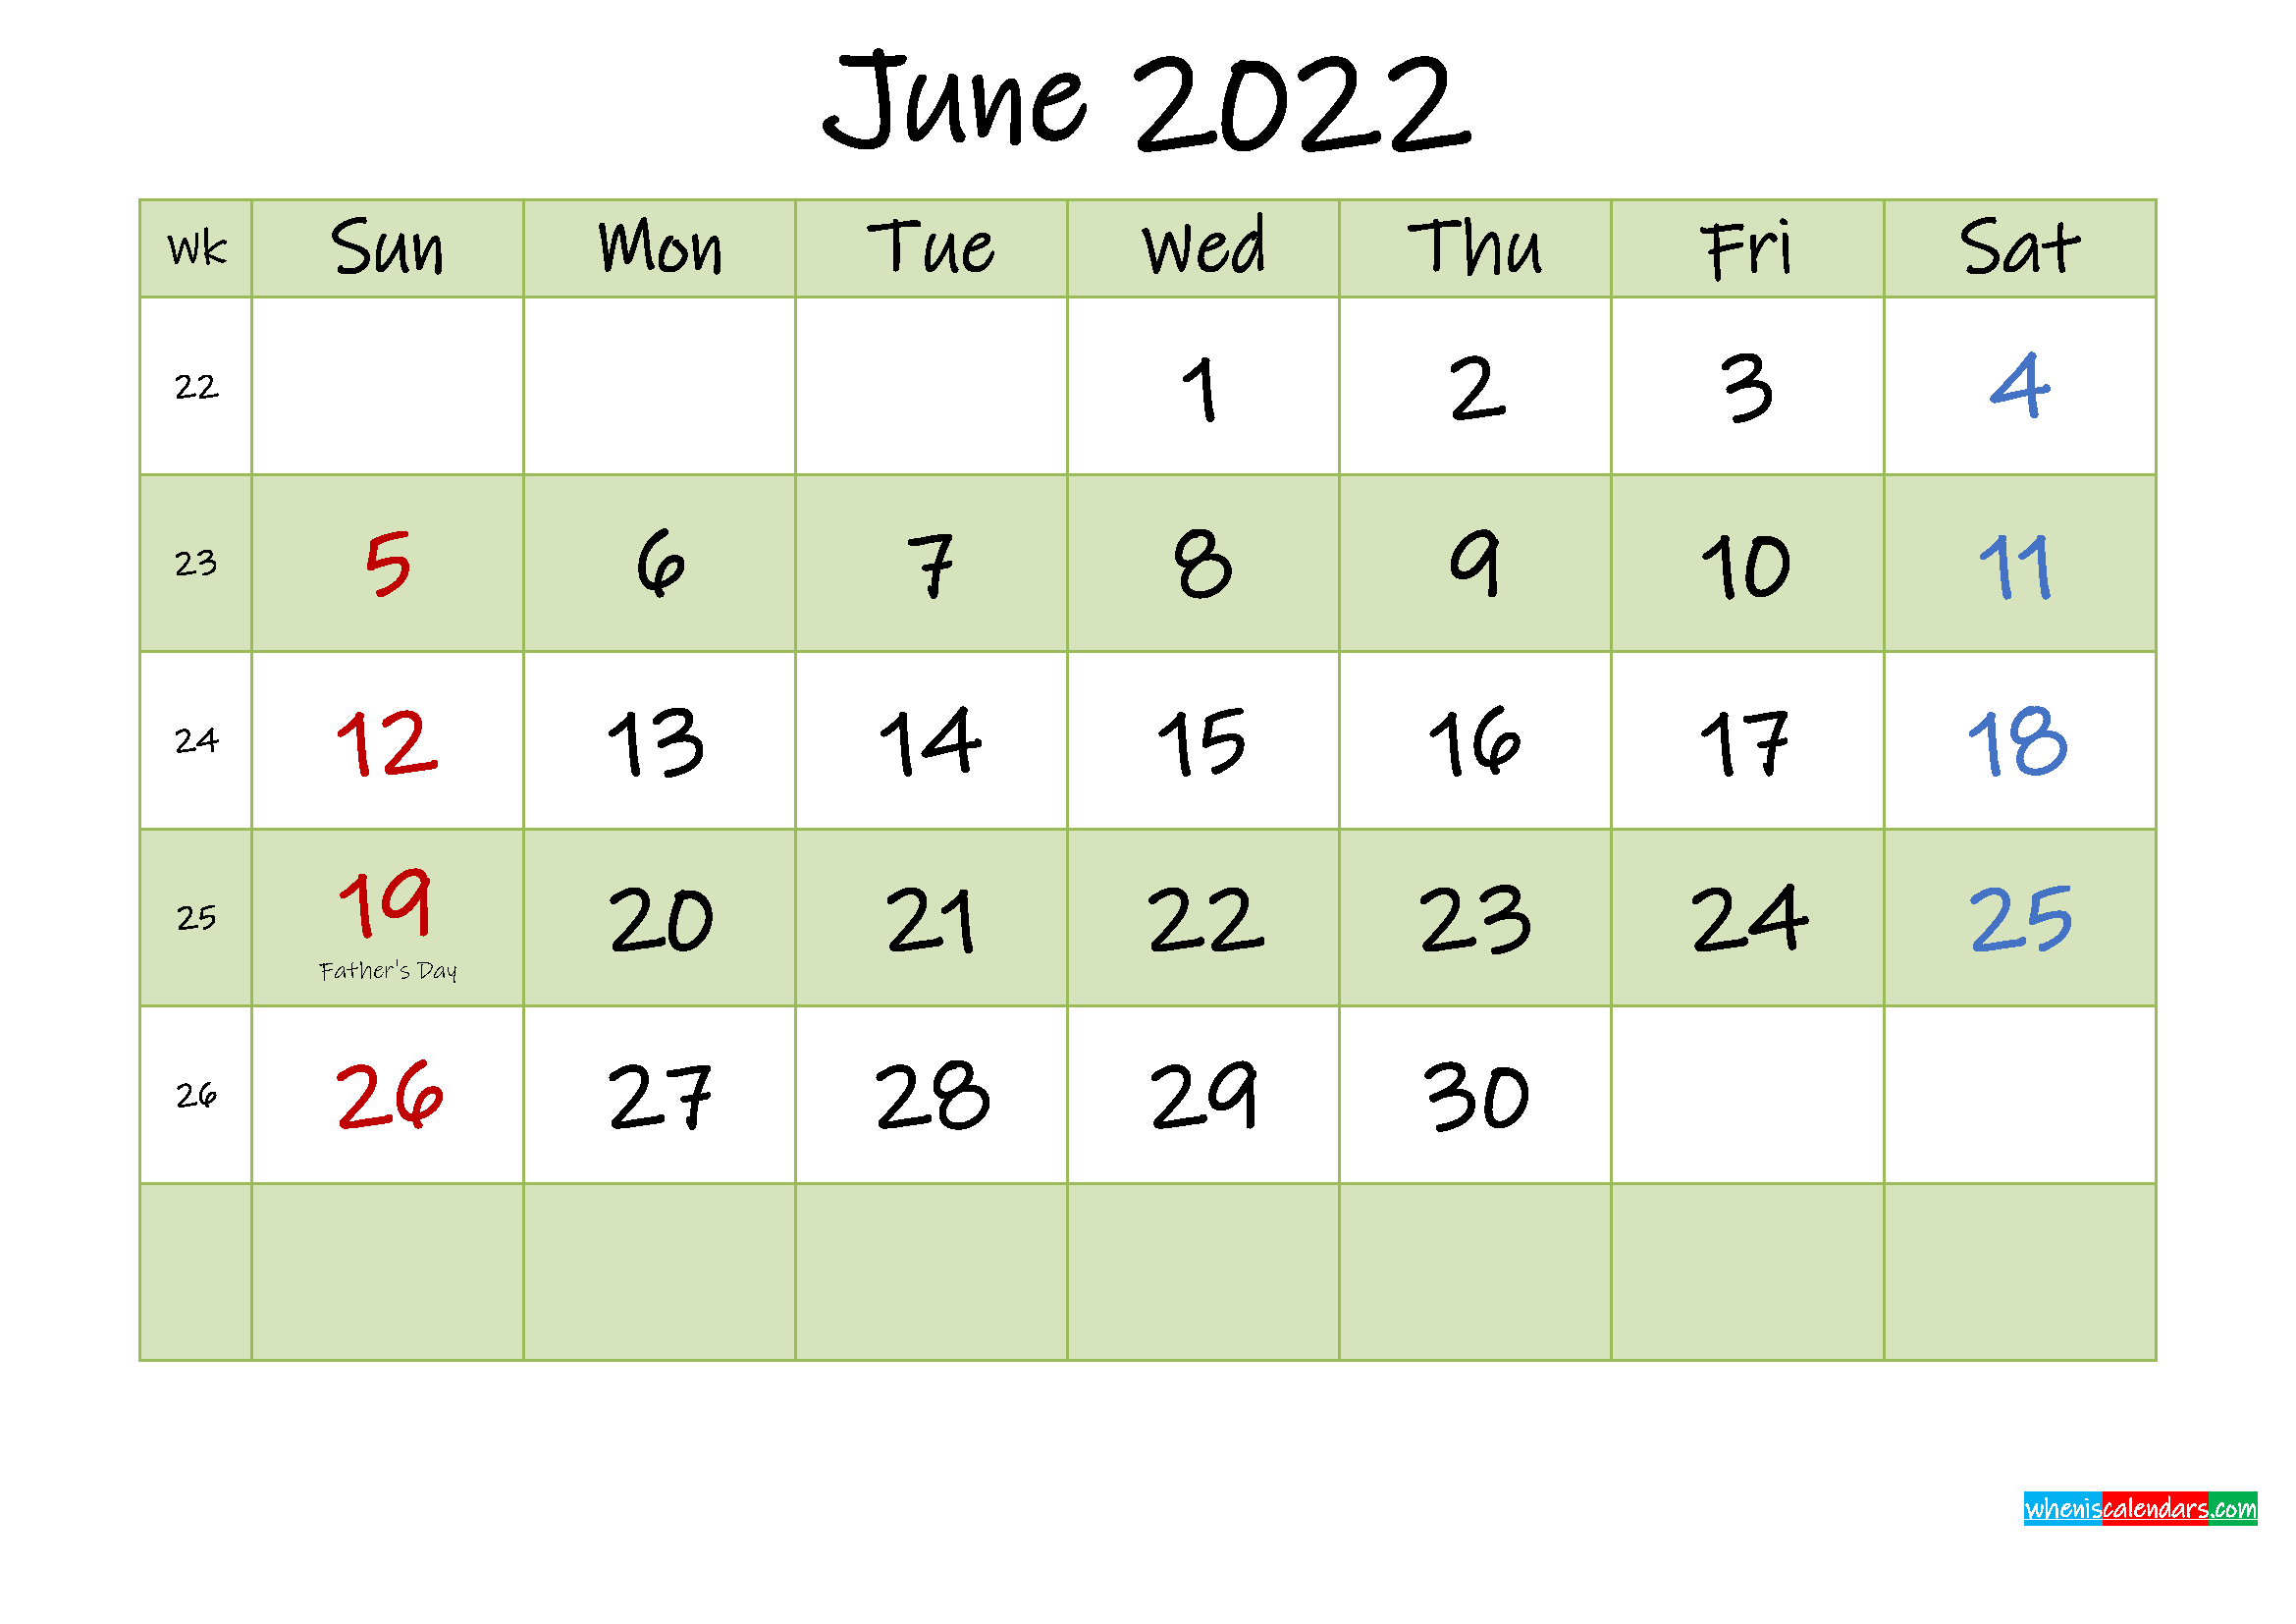 Get Free Calendar June 2022